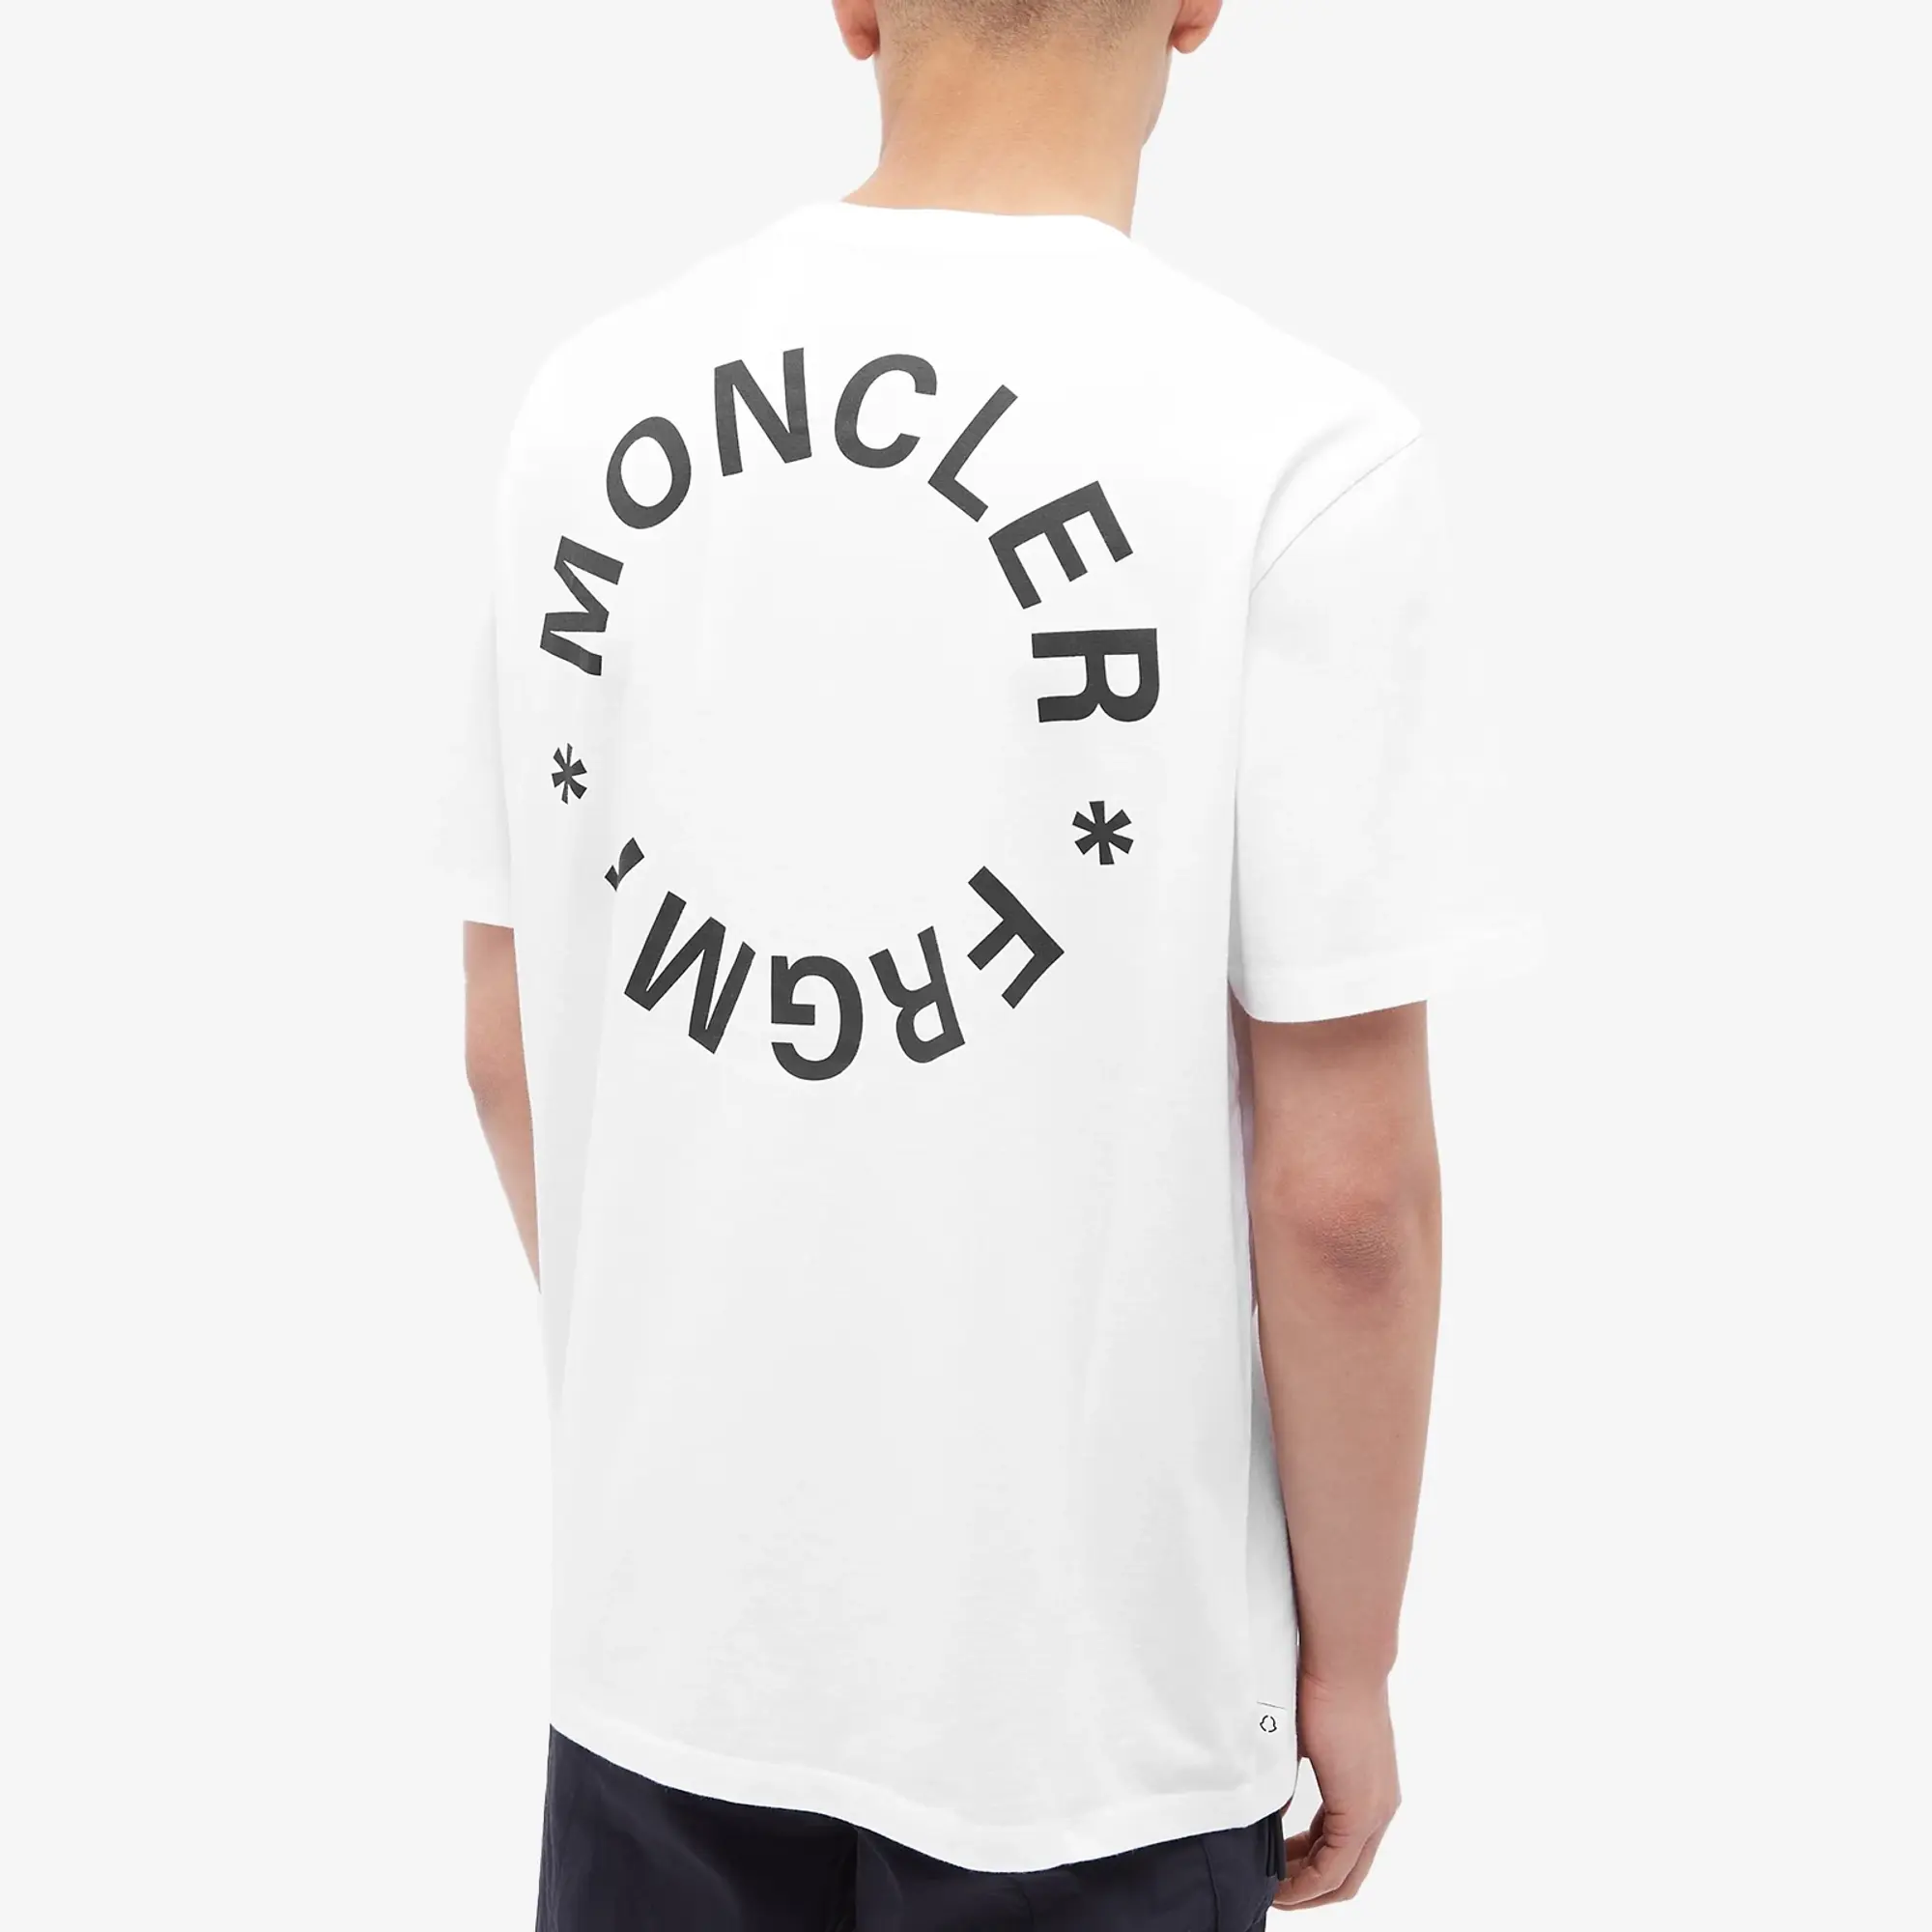 Moncler Men's Genius x Fragment T-Shirt White